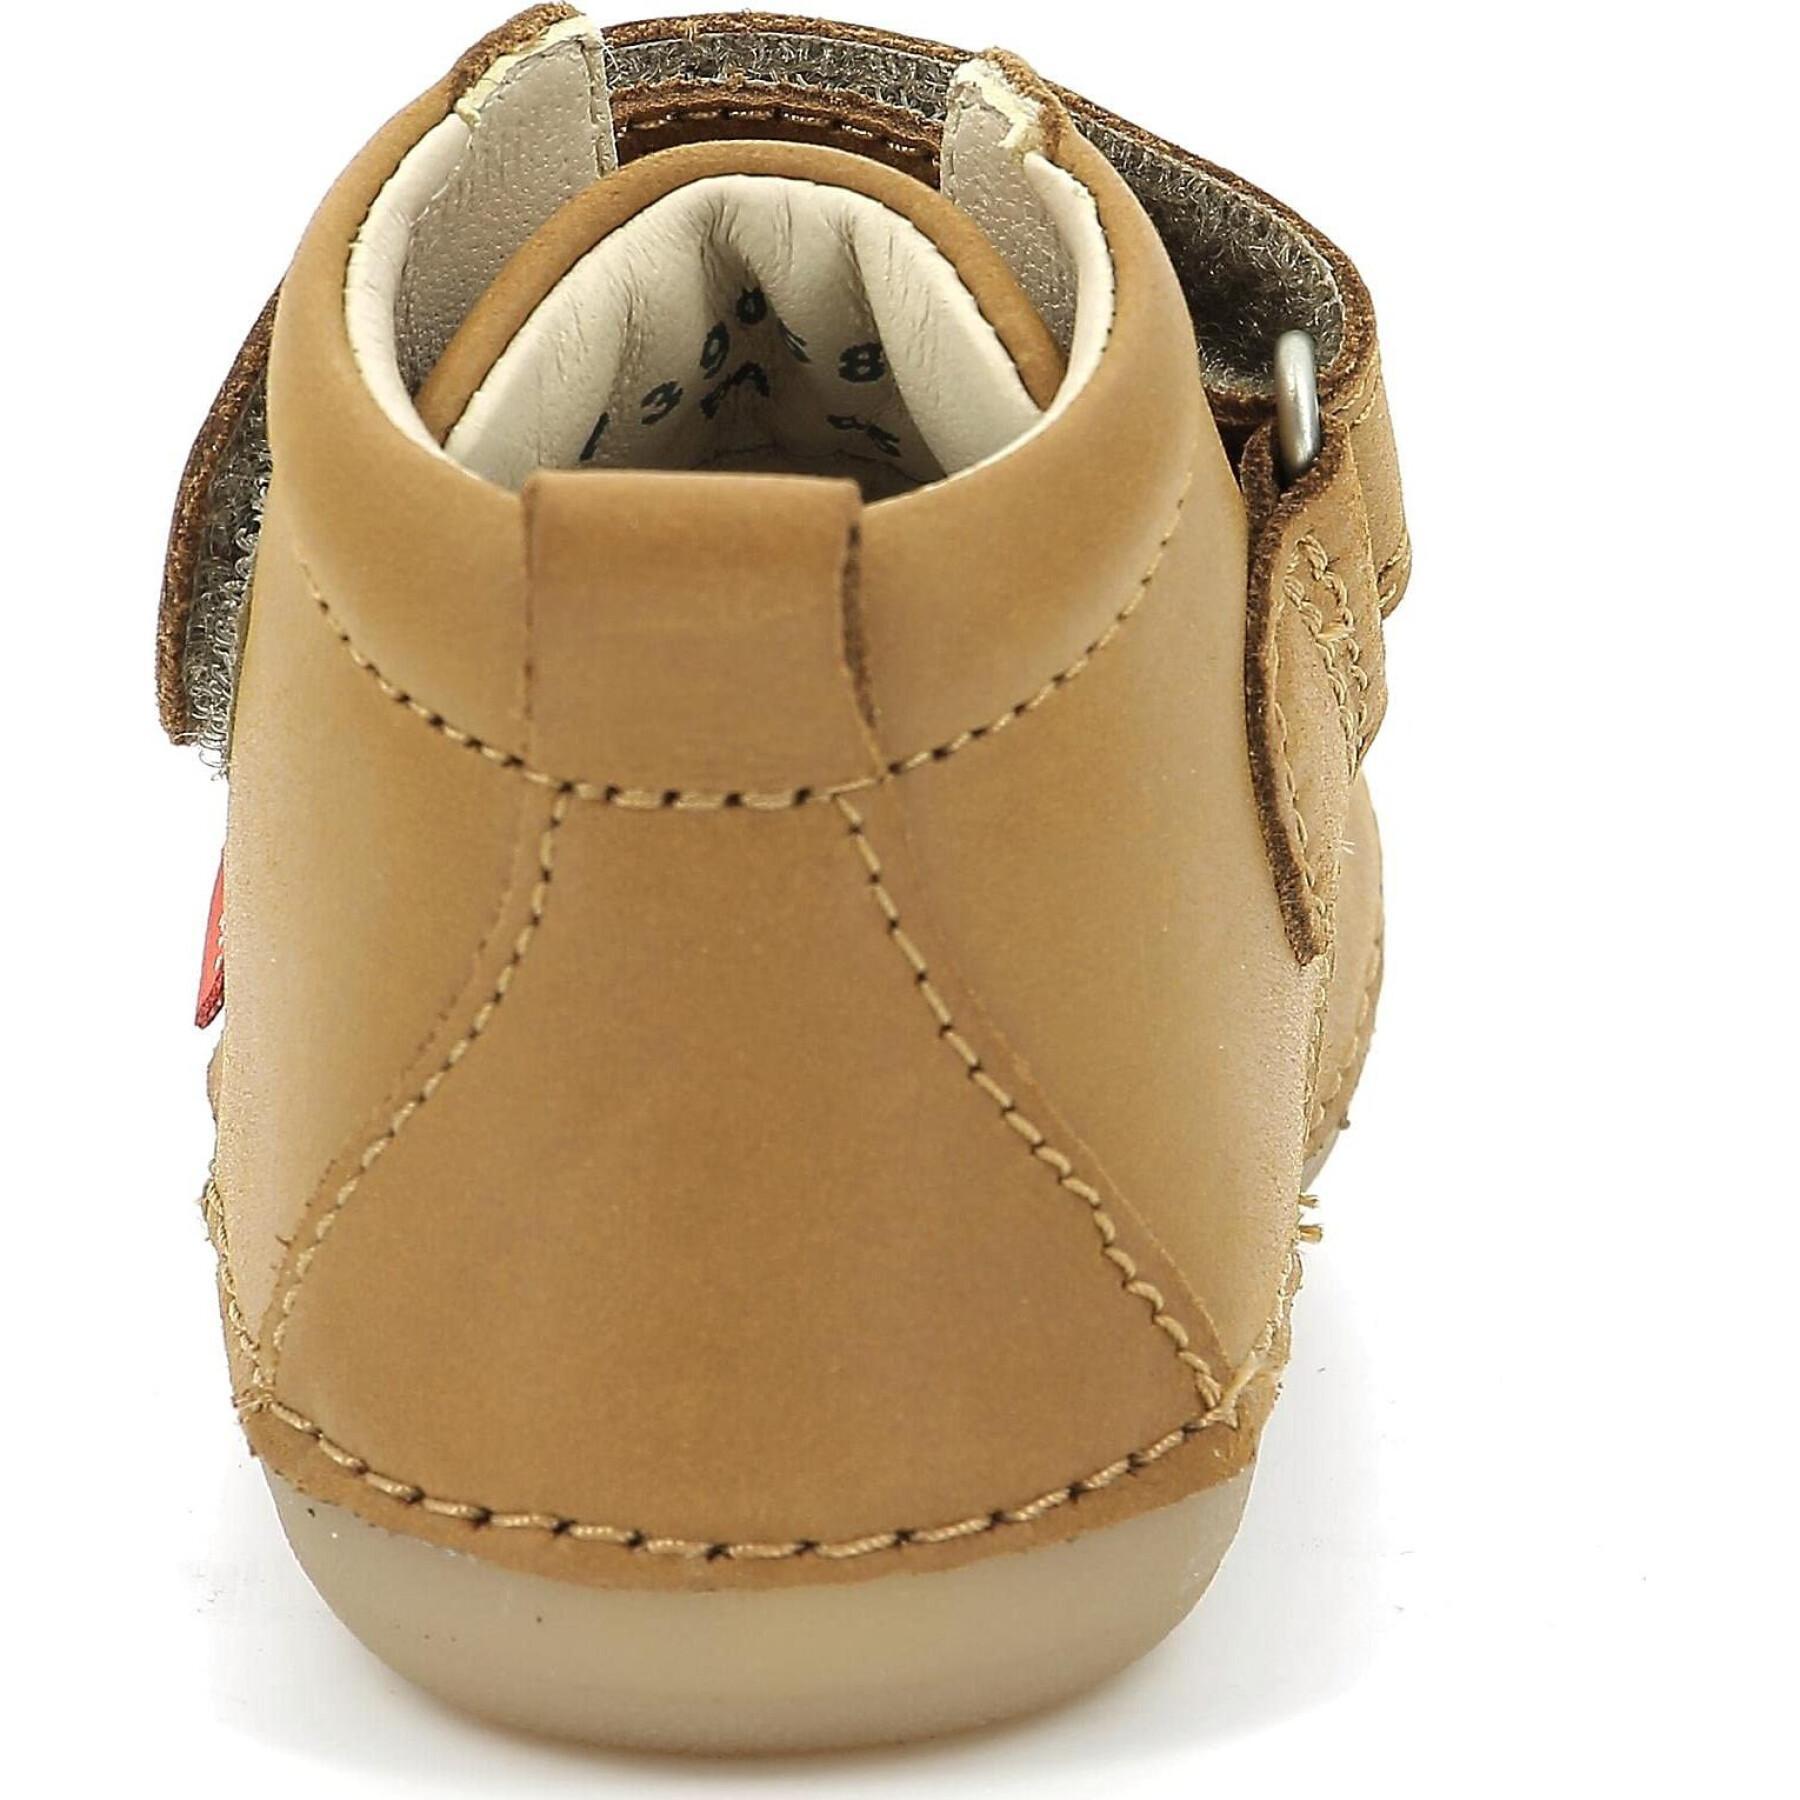 Baby shoes Kickers Sabio